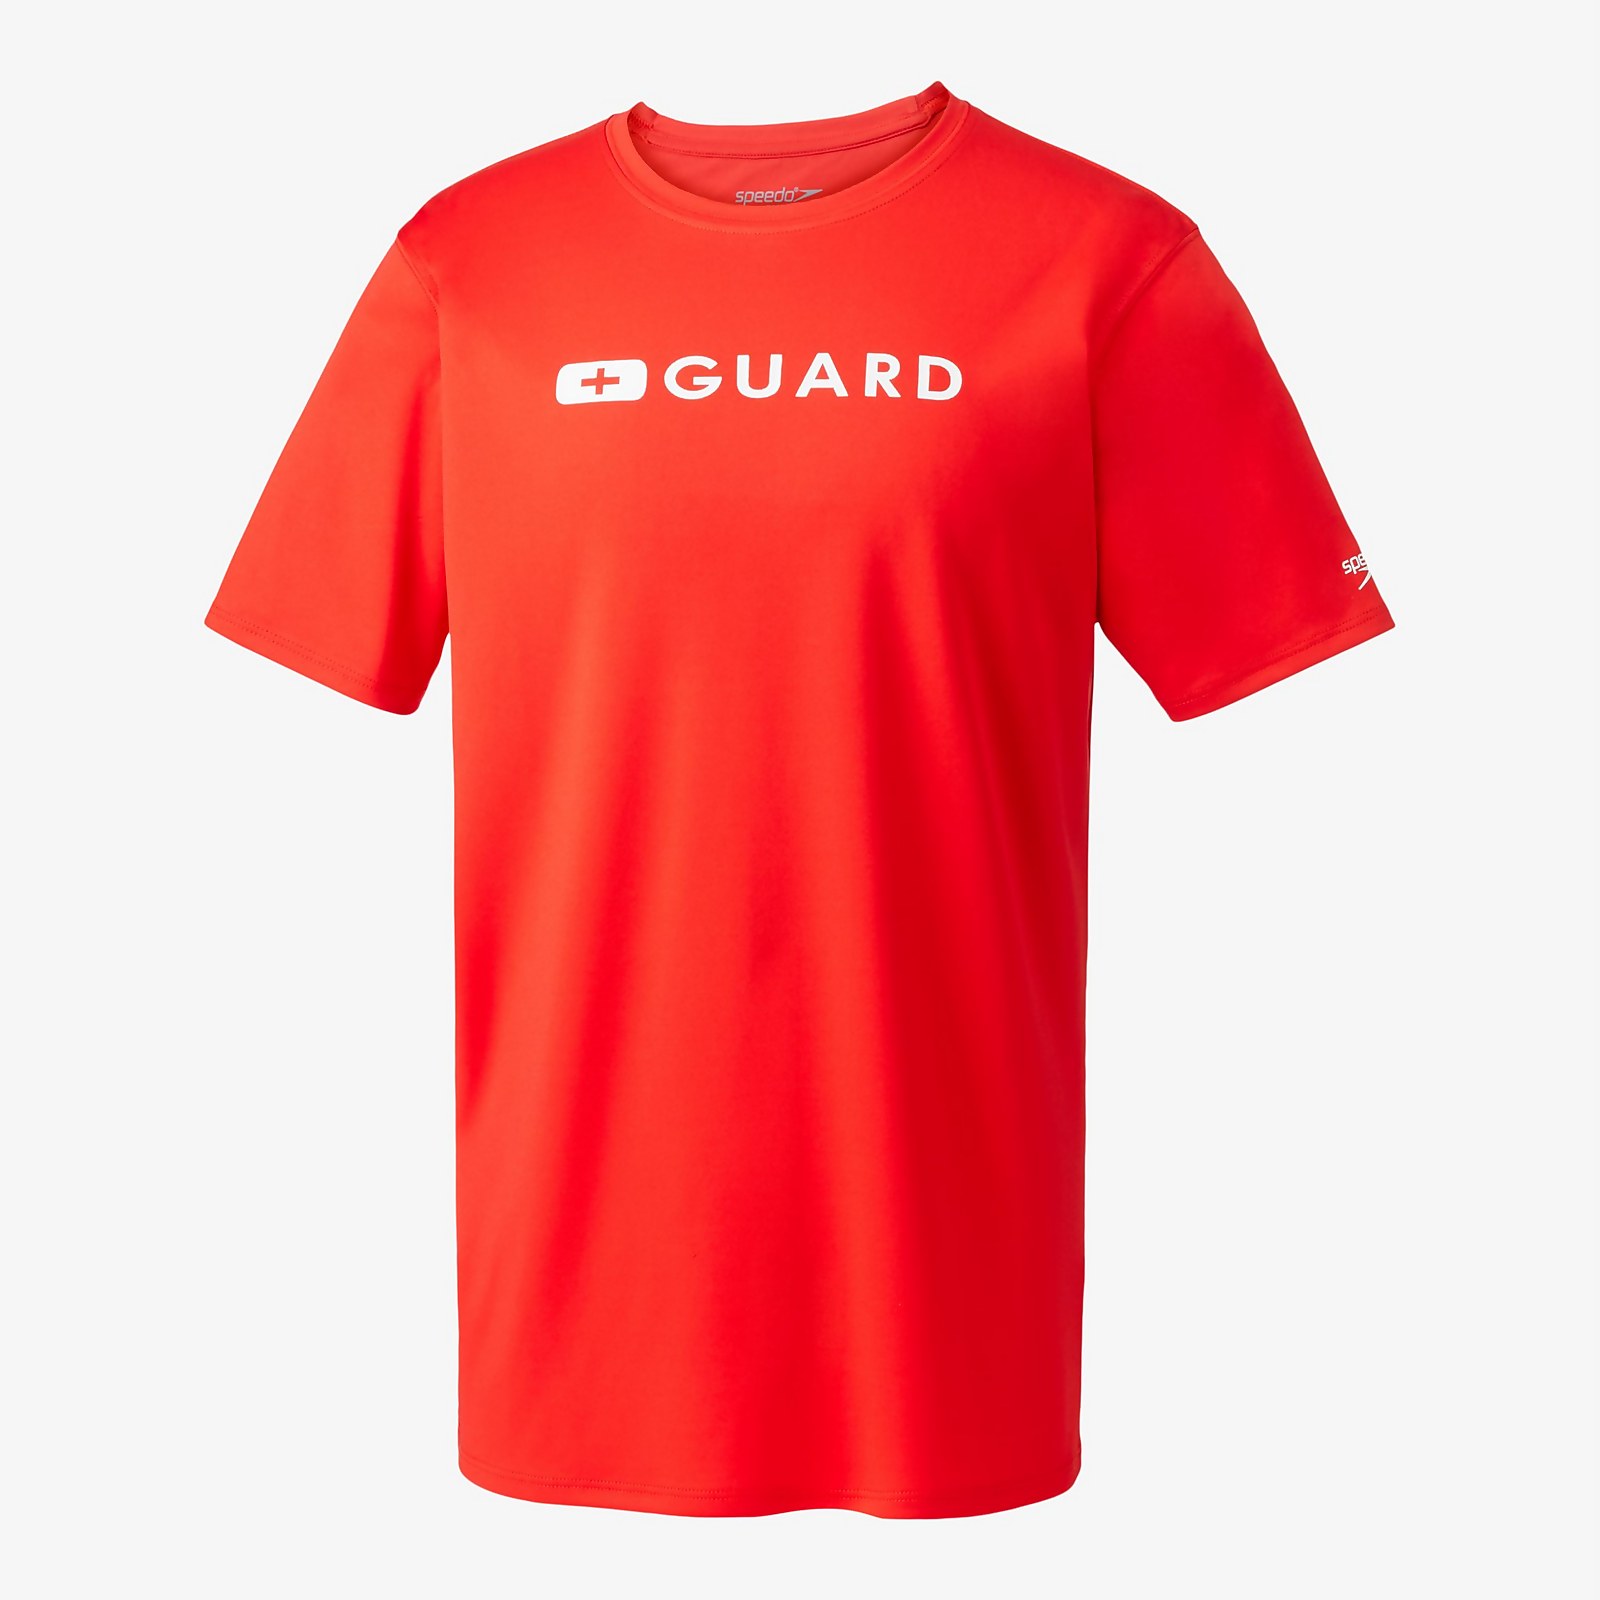 Speedo  Guard New Easy Short Sleeve Tee - S    : Red